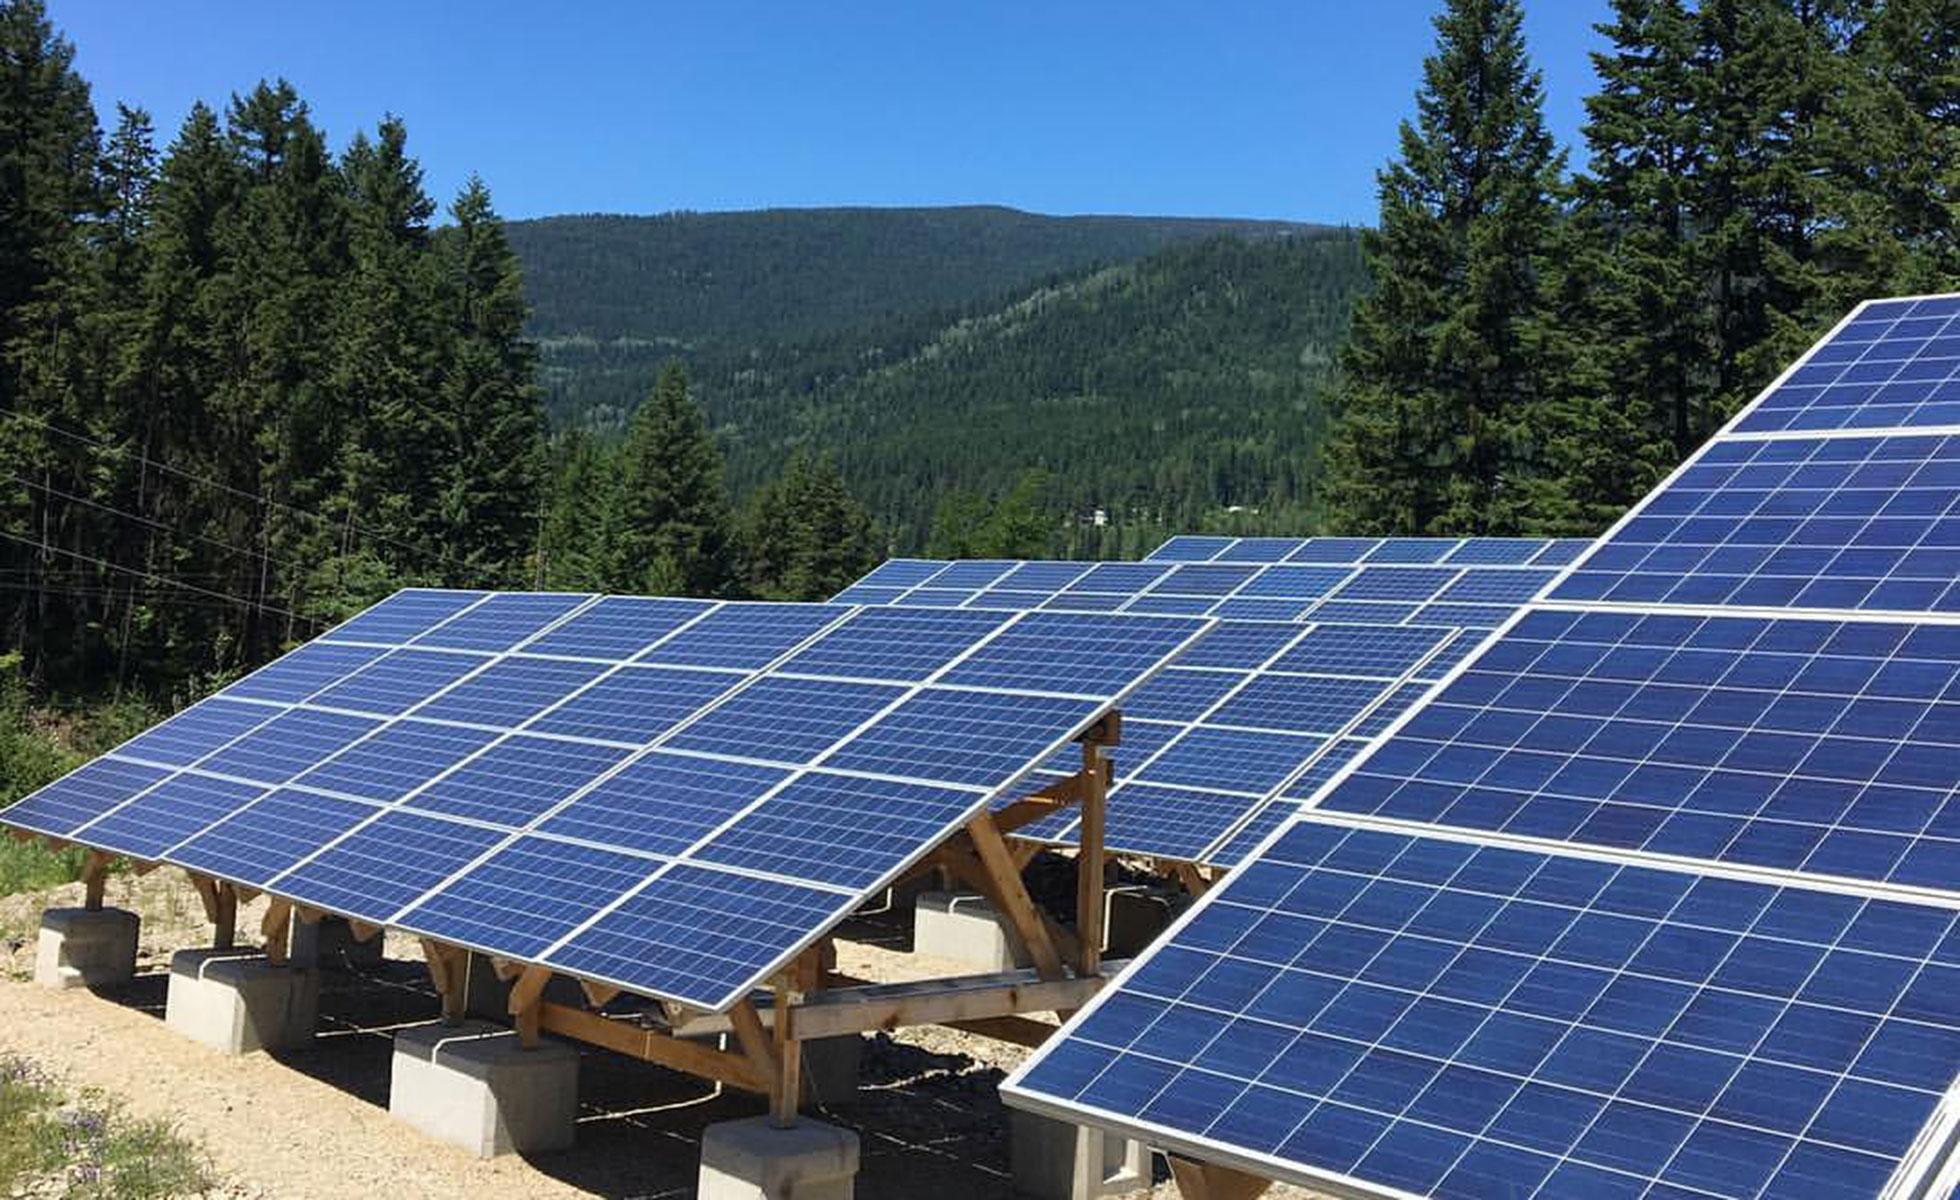 Nelson, B.C. saves money with Canada's first community solar garden David Suzuki Foundation